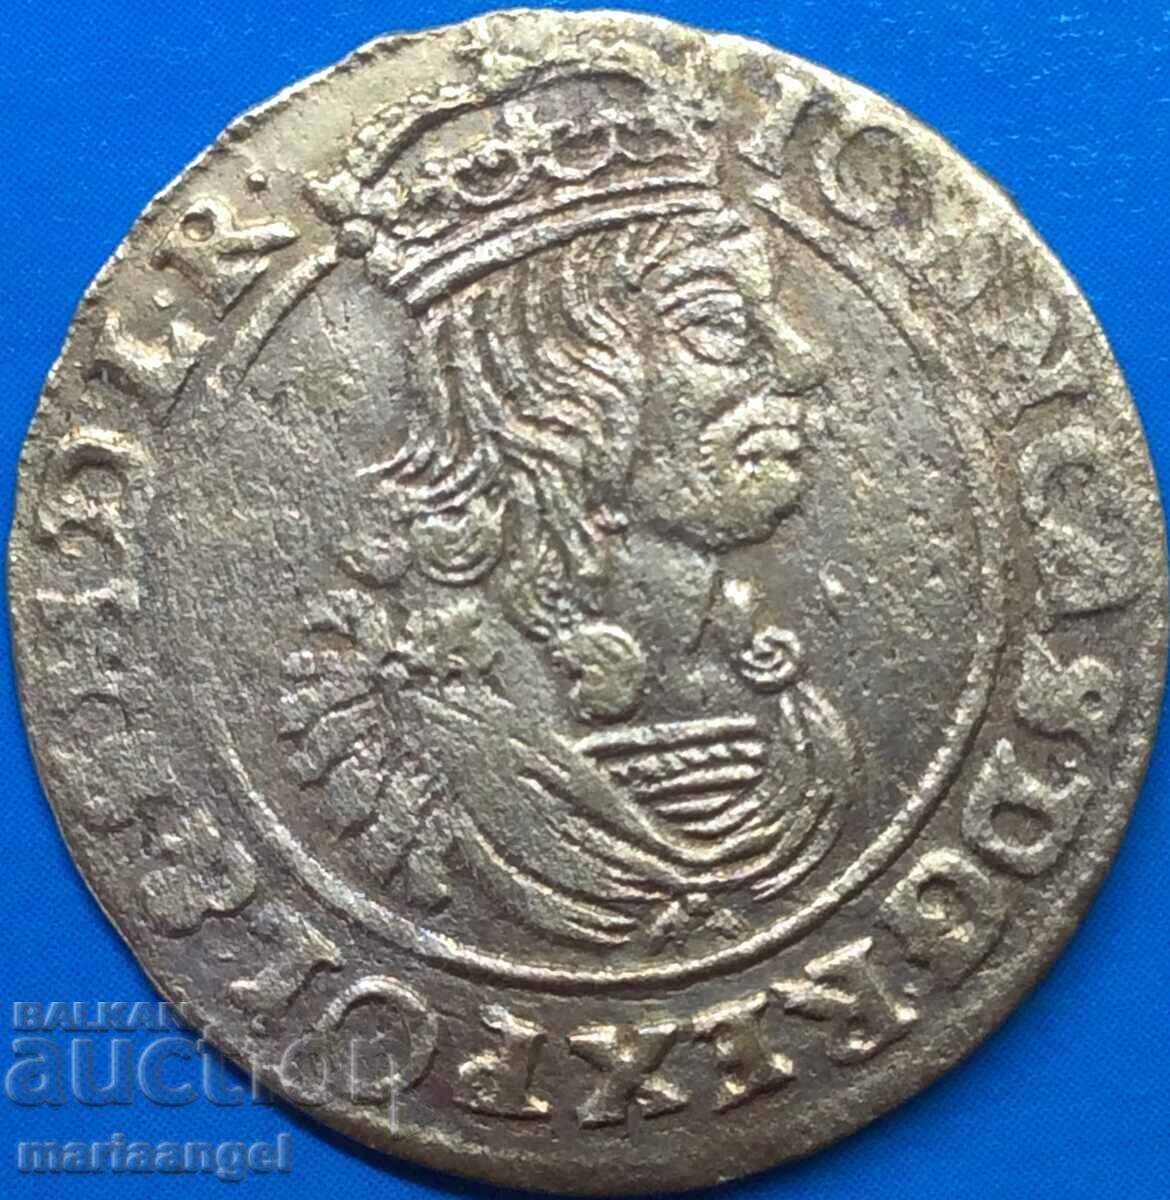 Полша 6 гроша (Шестак) Иван II Казимир сребро